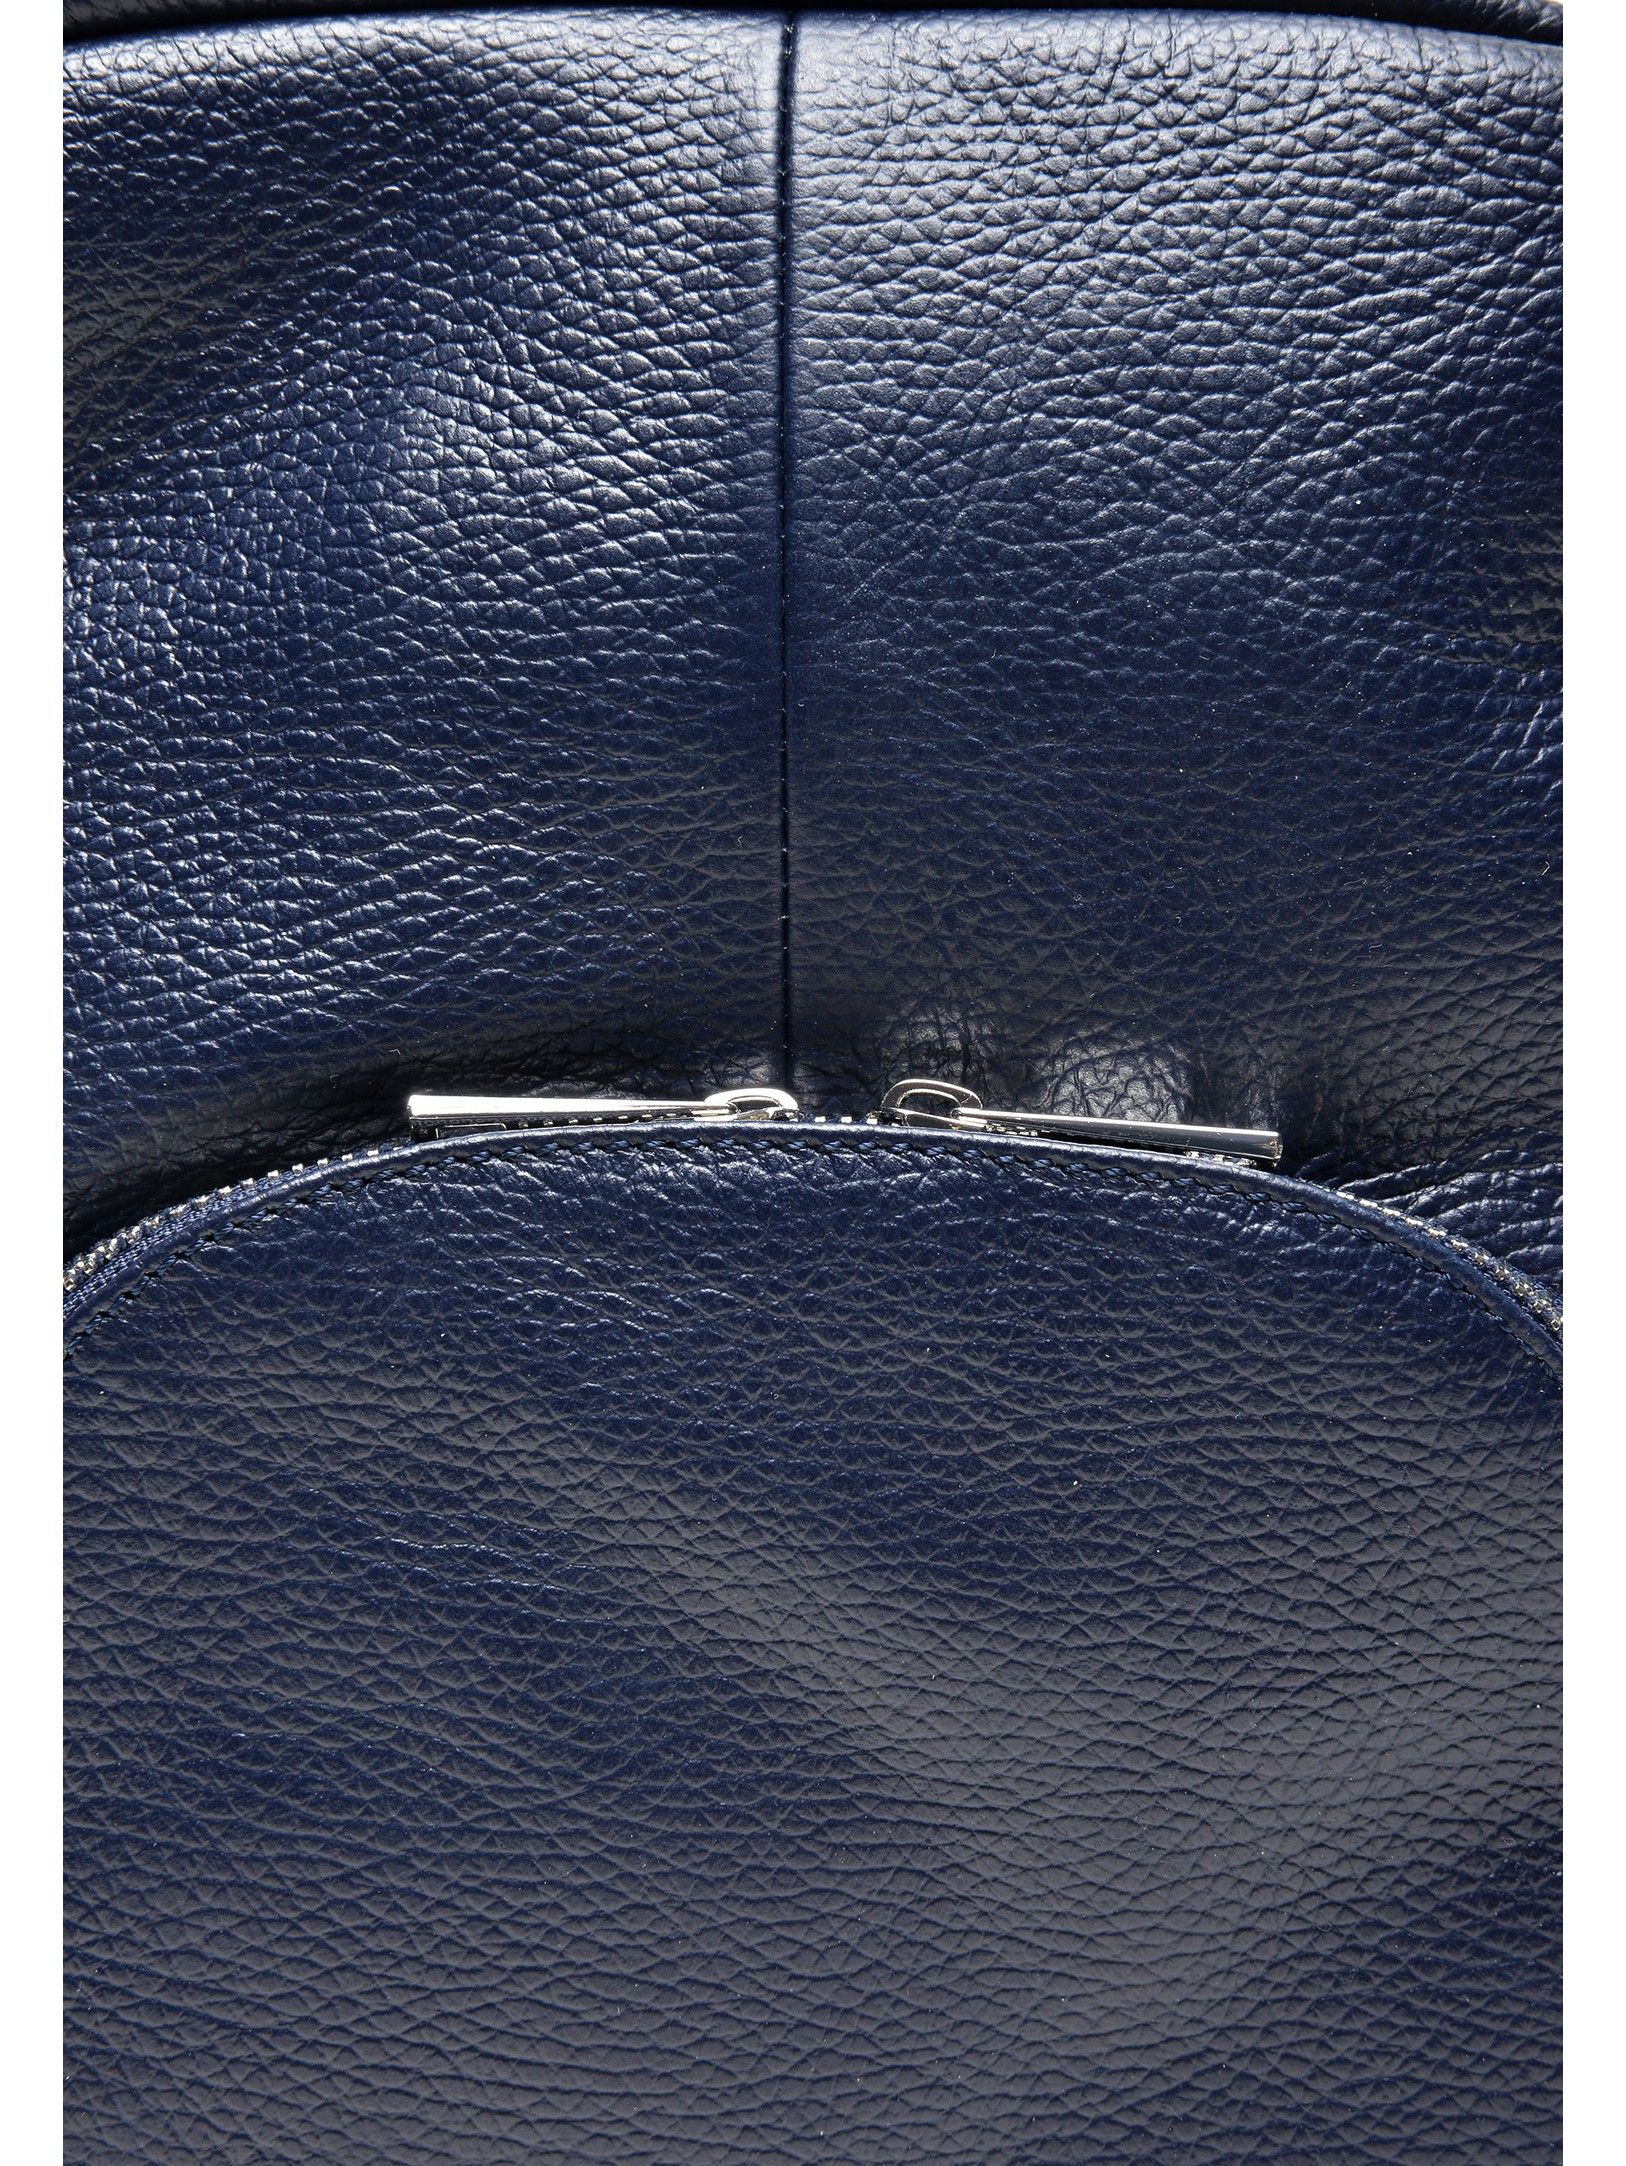 Backpack
100% cow leather
Back zip pocket
Front patch pocket
Top zip closure
Interior pocket                        
Handle: 22 cm
Adjustable shoulder straps: 90 cm x 2
Dimensions (L):32x27x10 cm